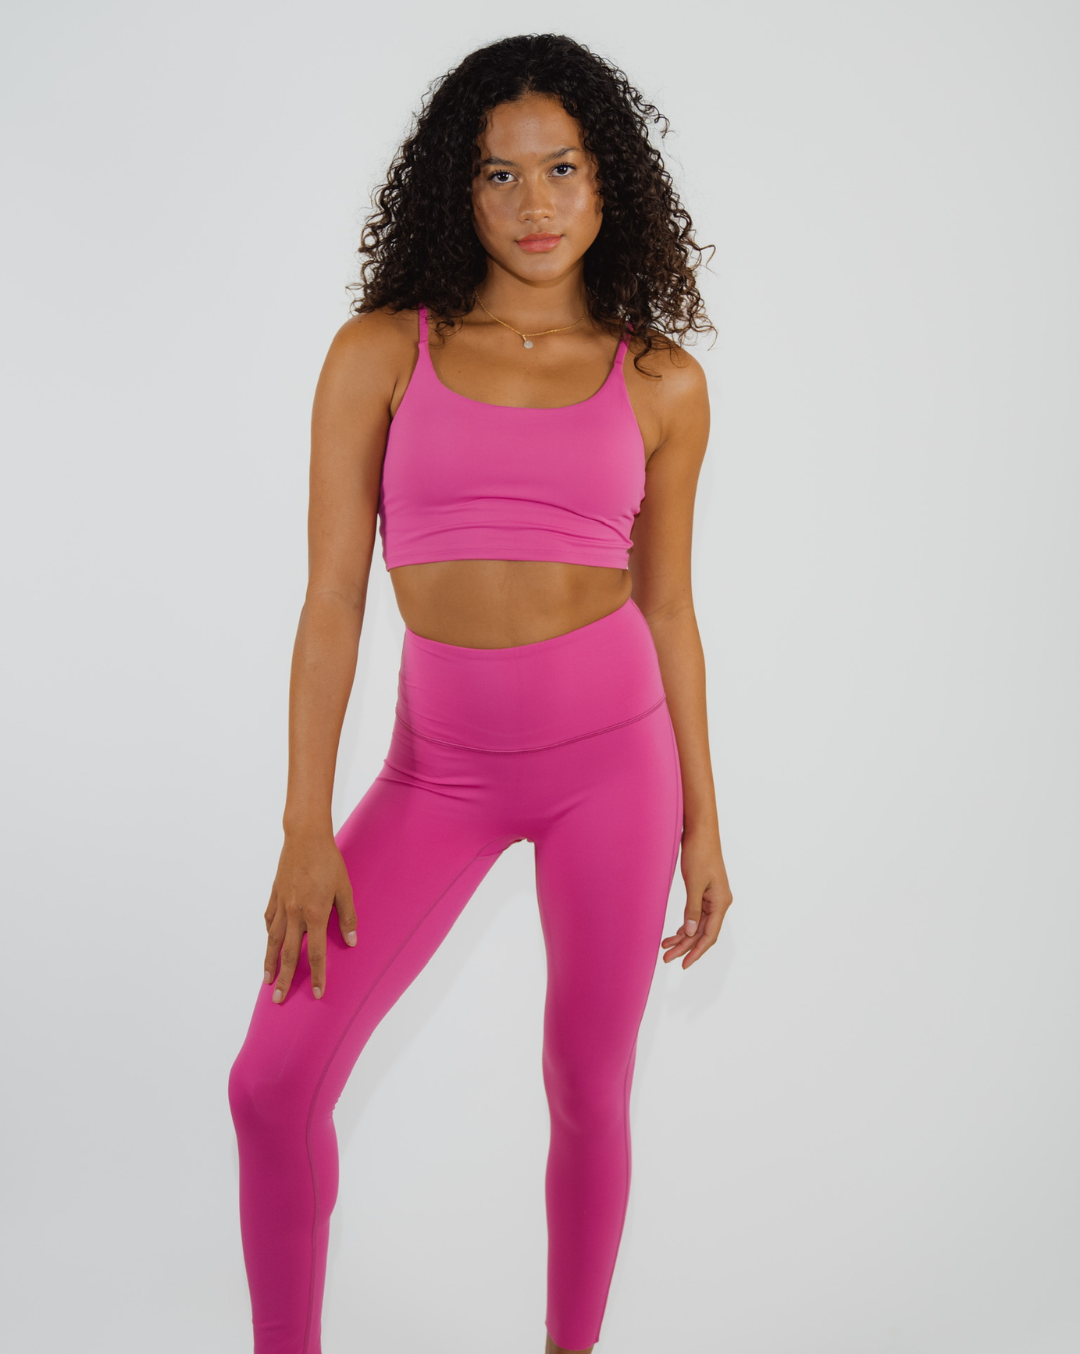 
                  
                    Flexibility-focused fitness attire in bright pink
                  
                